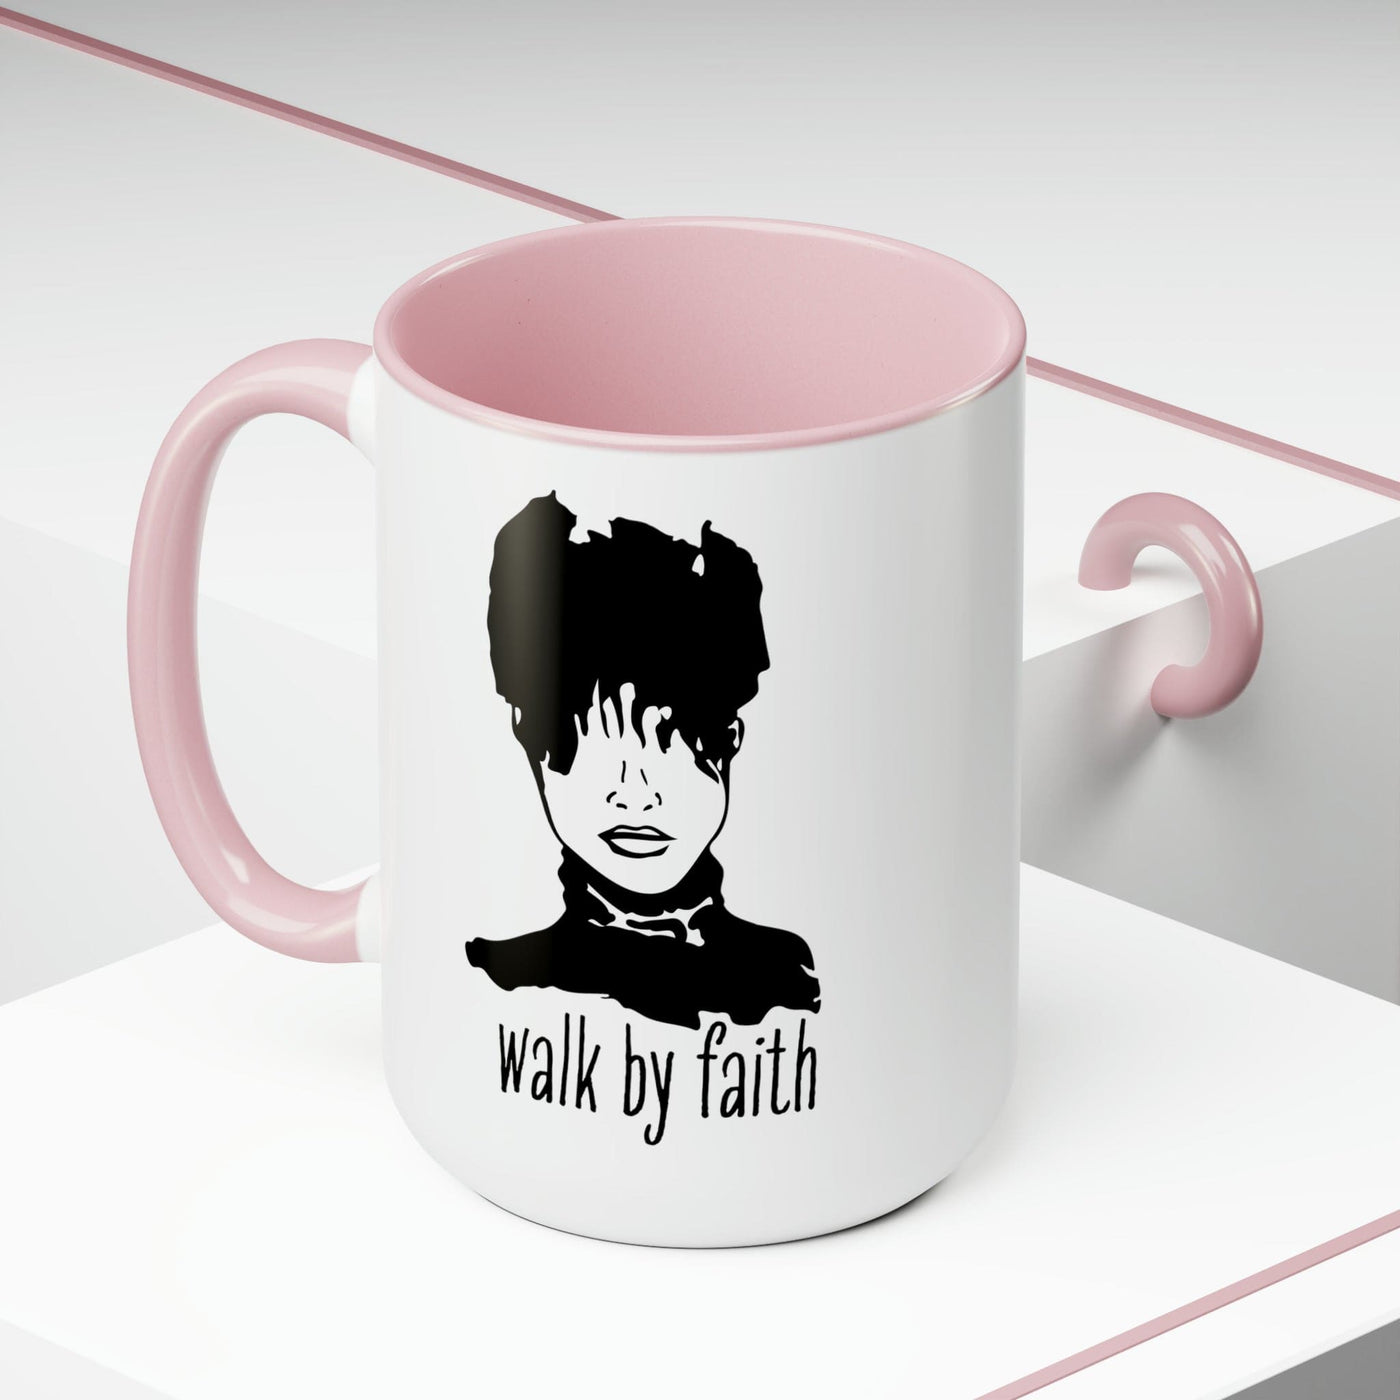 Accent Ceramic Coffee Mug 15oz - Say It Soul Walk By Faith Positive Inspiration